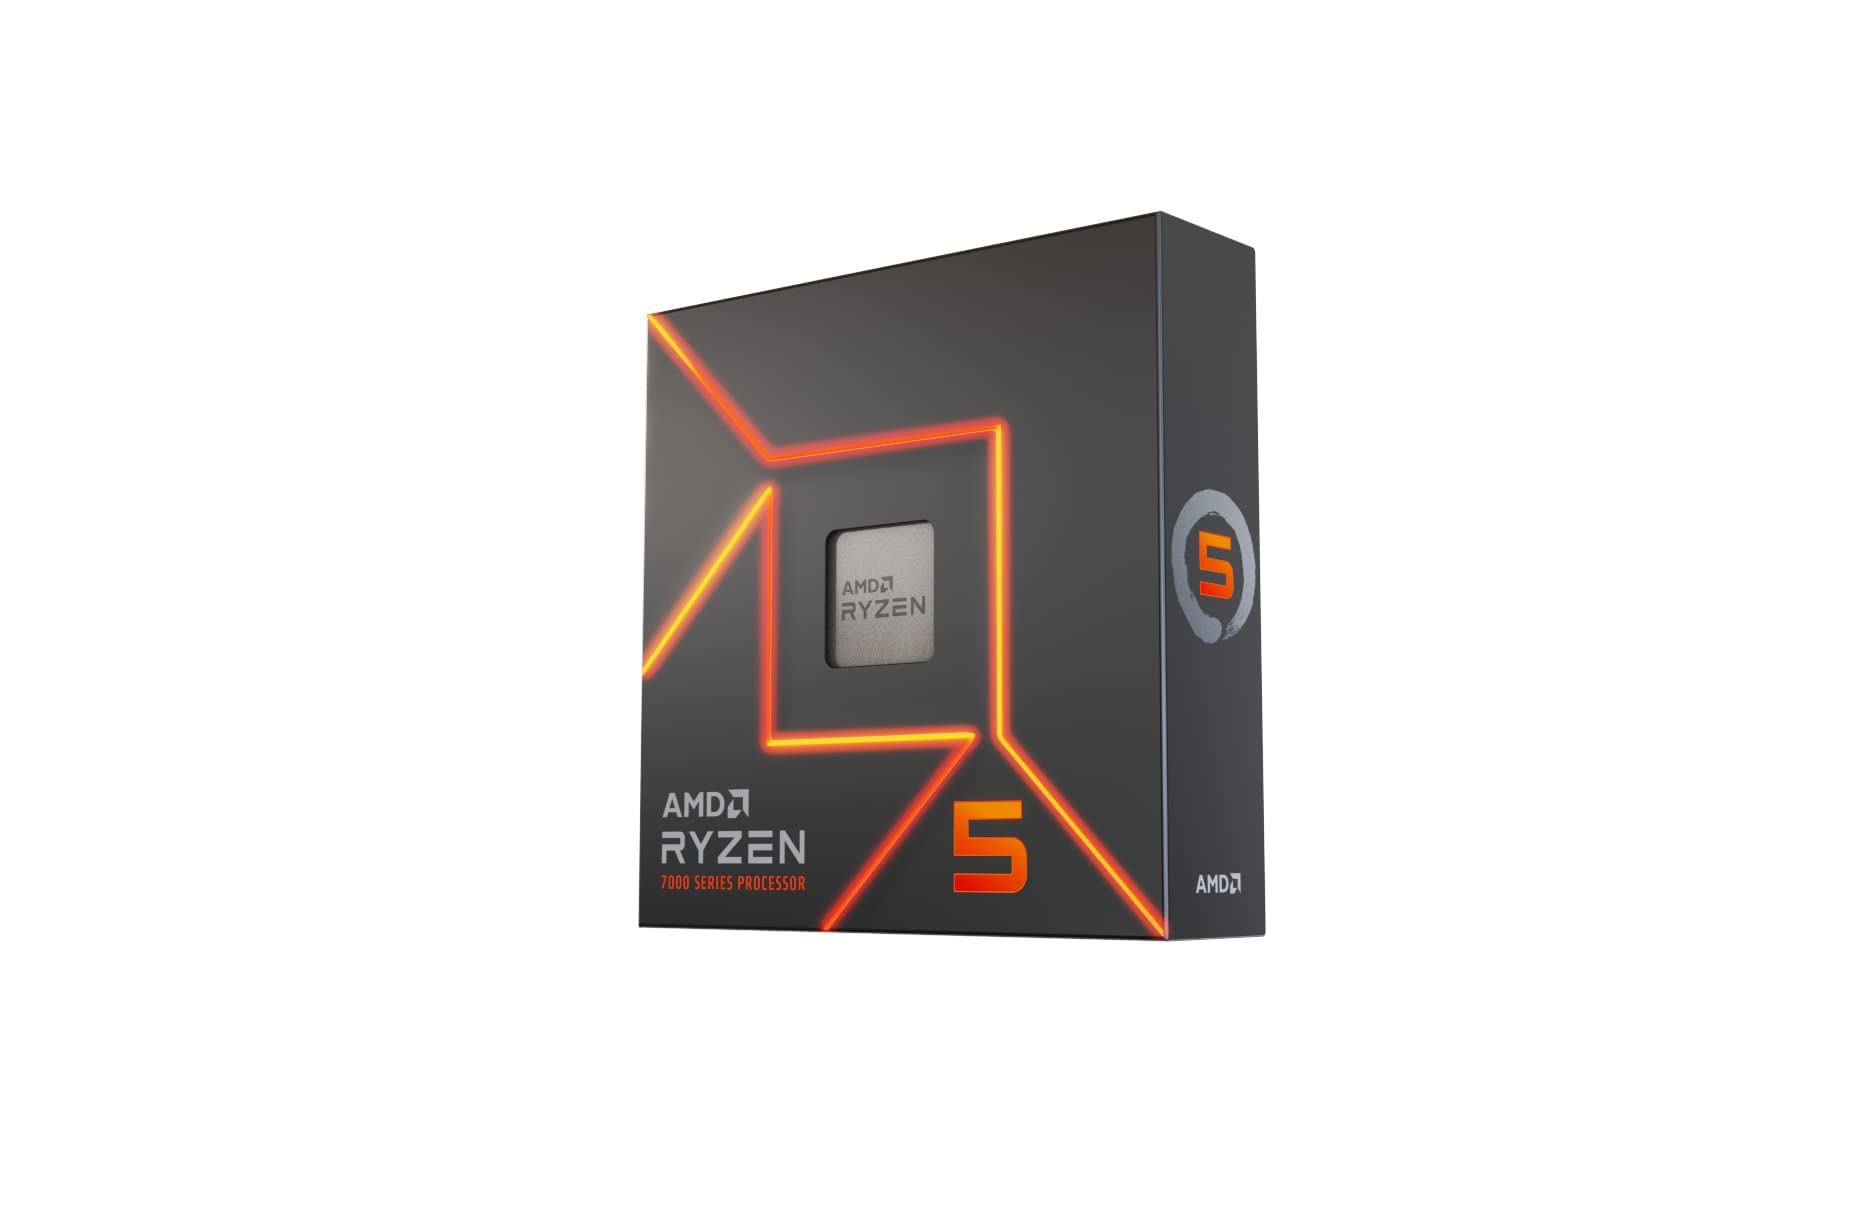 AMD Ryzen™ 5 7600X 6-Core, 12-Thread Unlocked Desktop Processor $219.99 at Amazon